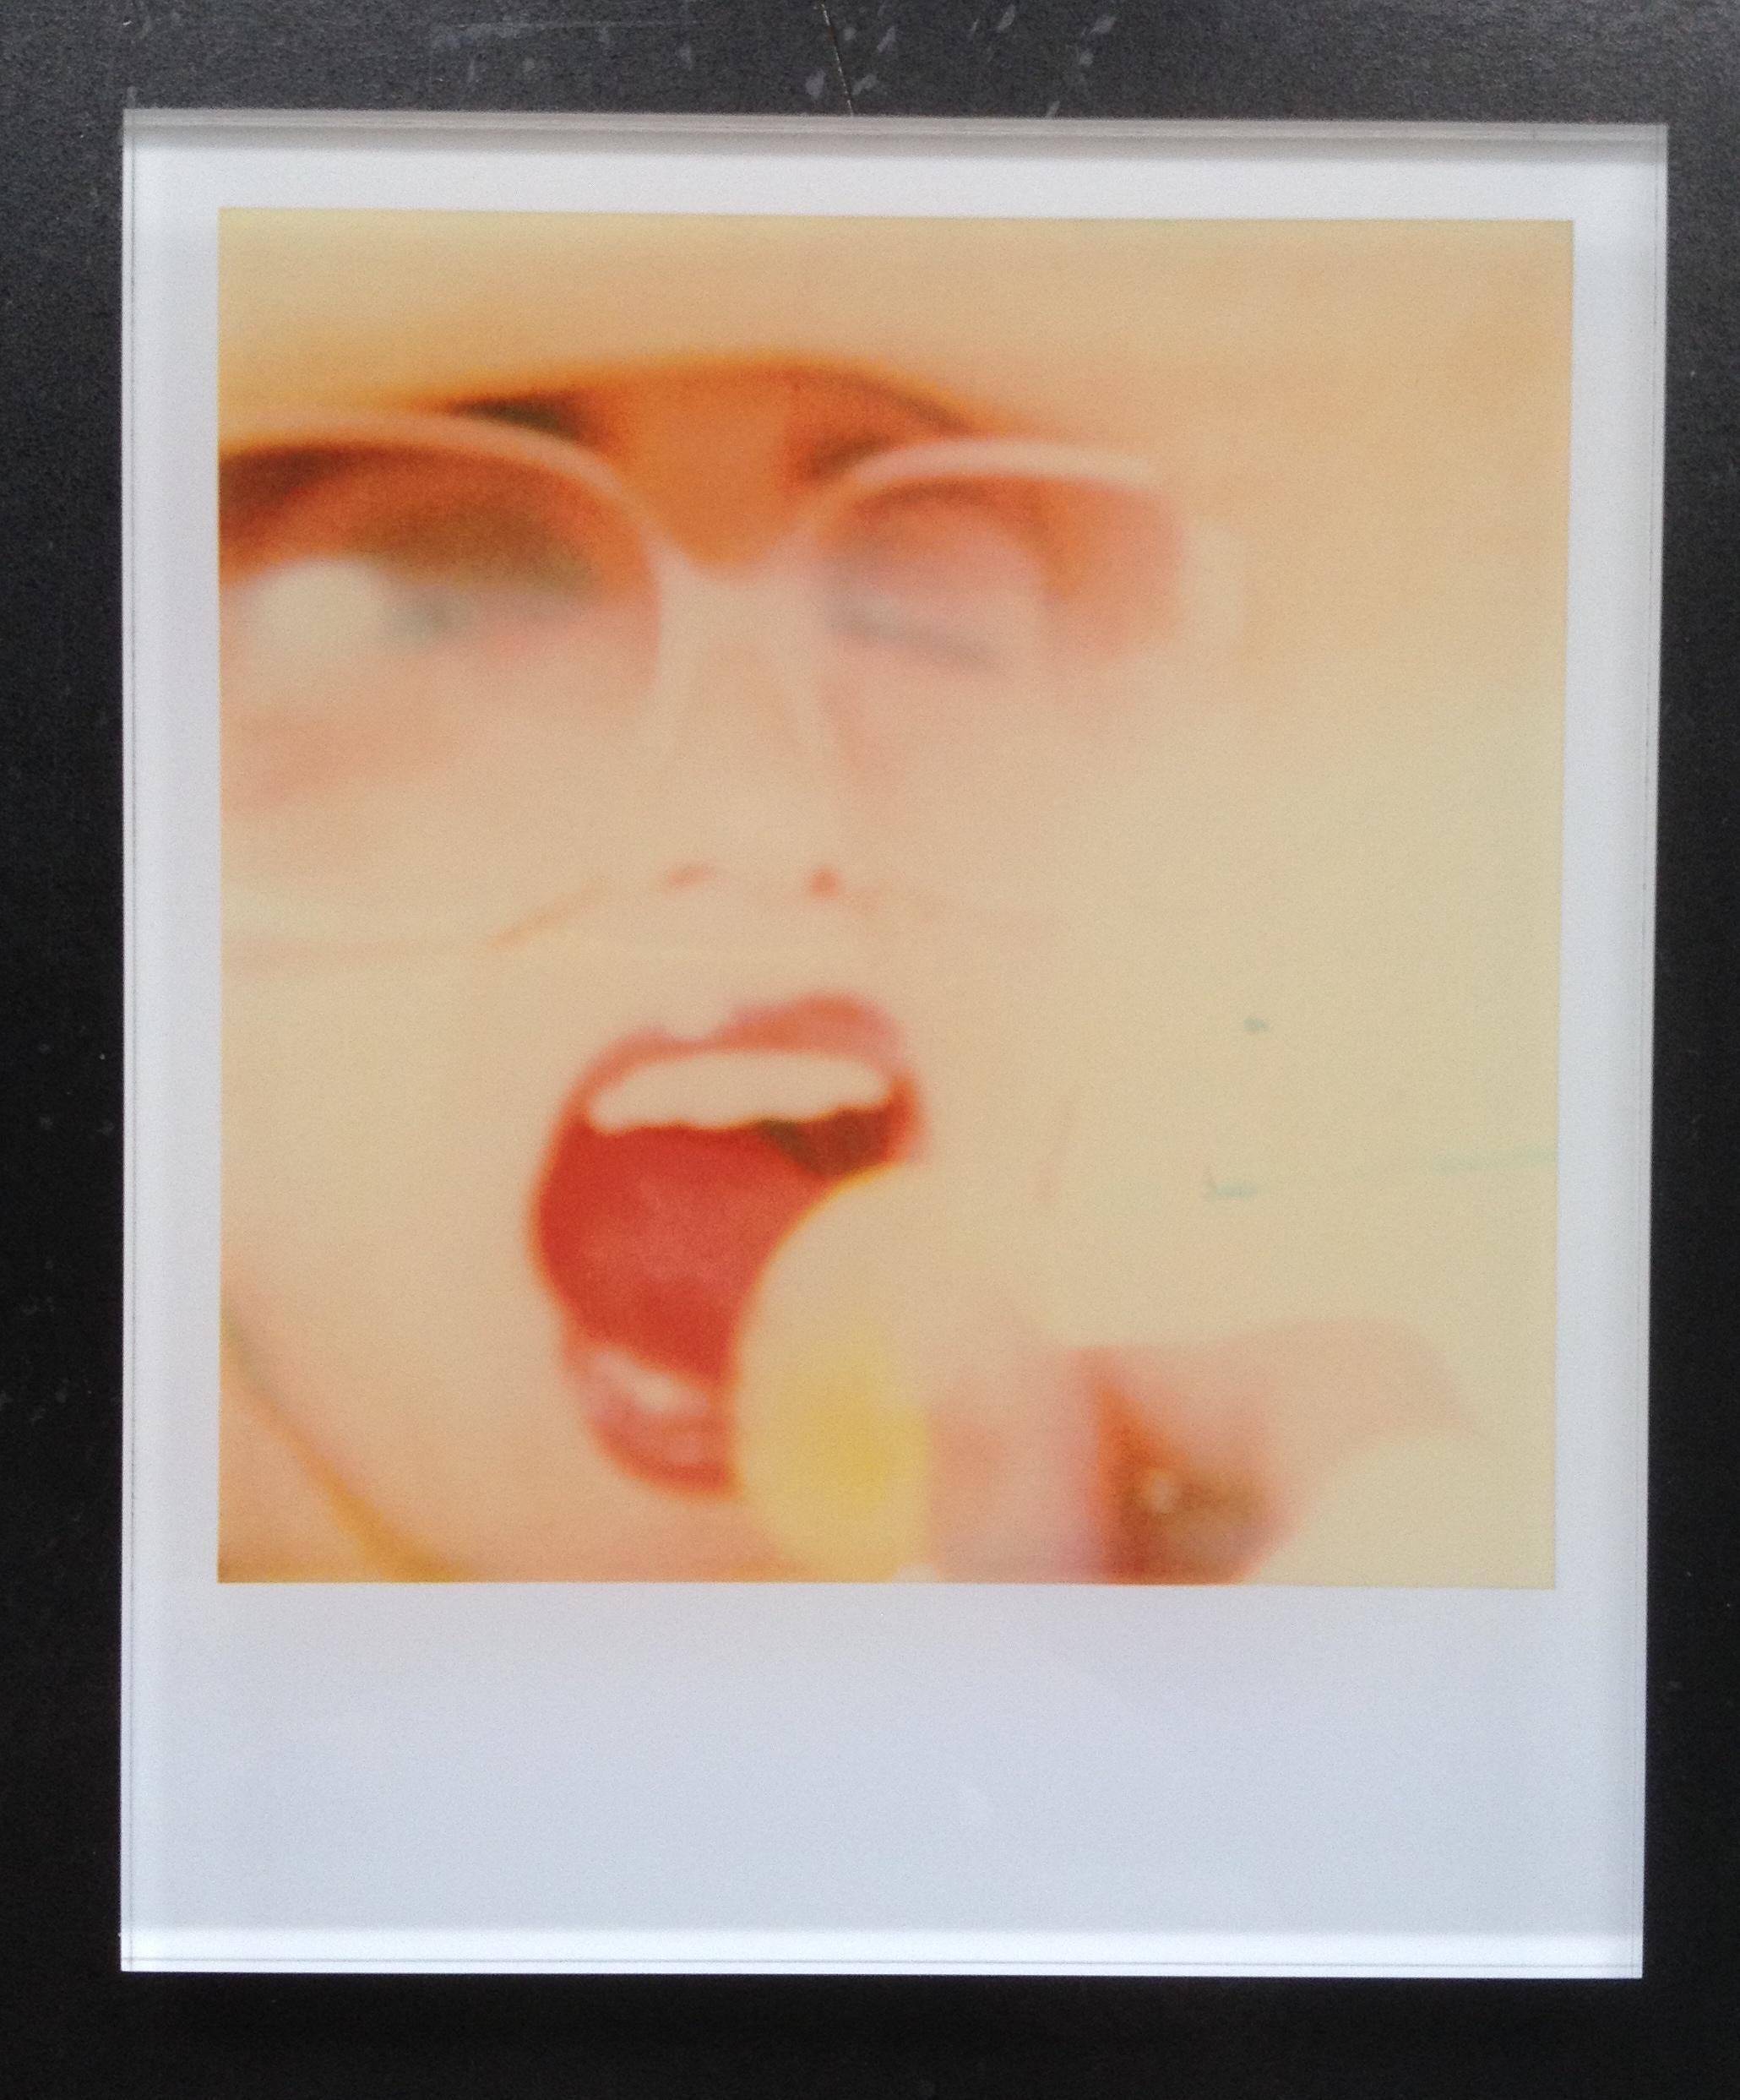 Stefanie Schneider Portrait Photograph - Lollipop Mini - mounted - featuring Radha Mitchell, based on a Polaroid